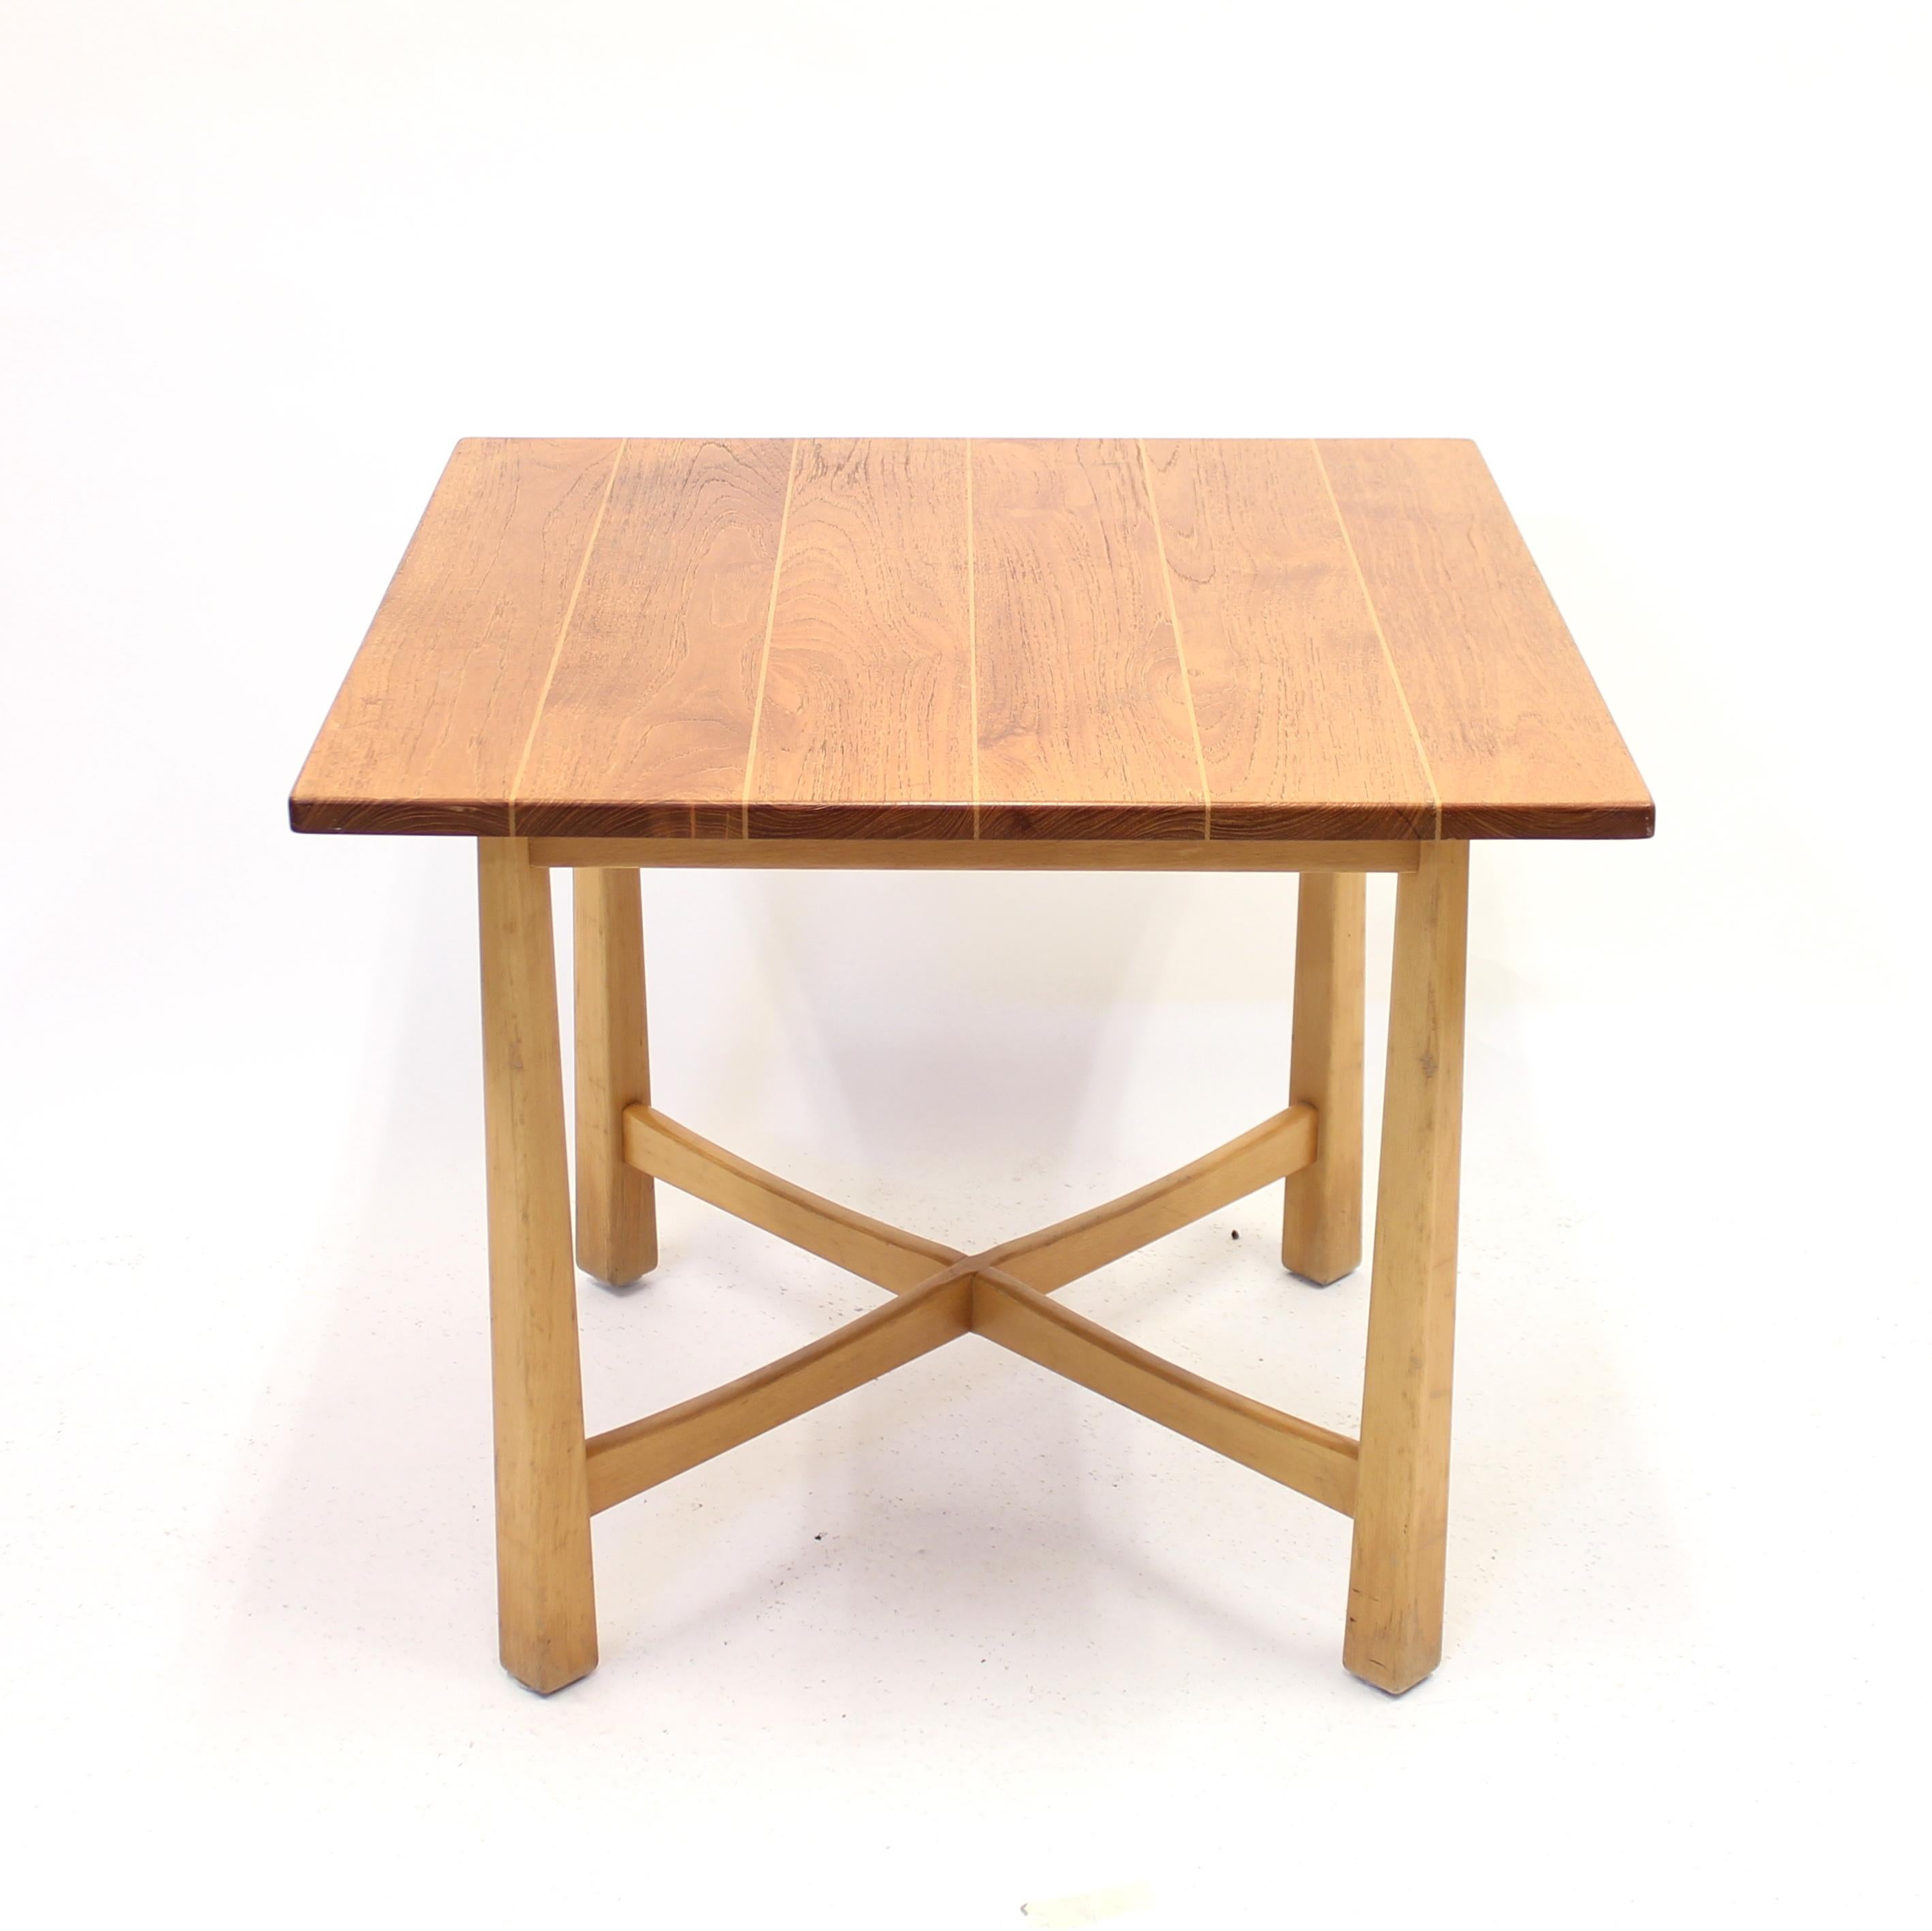 Scandinavian Modern Swedish Modern Teak and Birch Table, Mid-20th Century For Sale